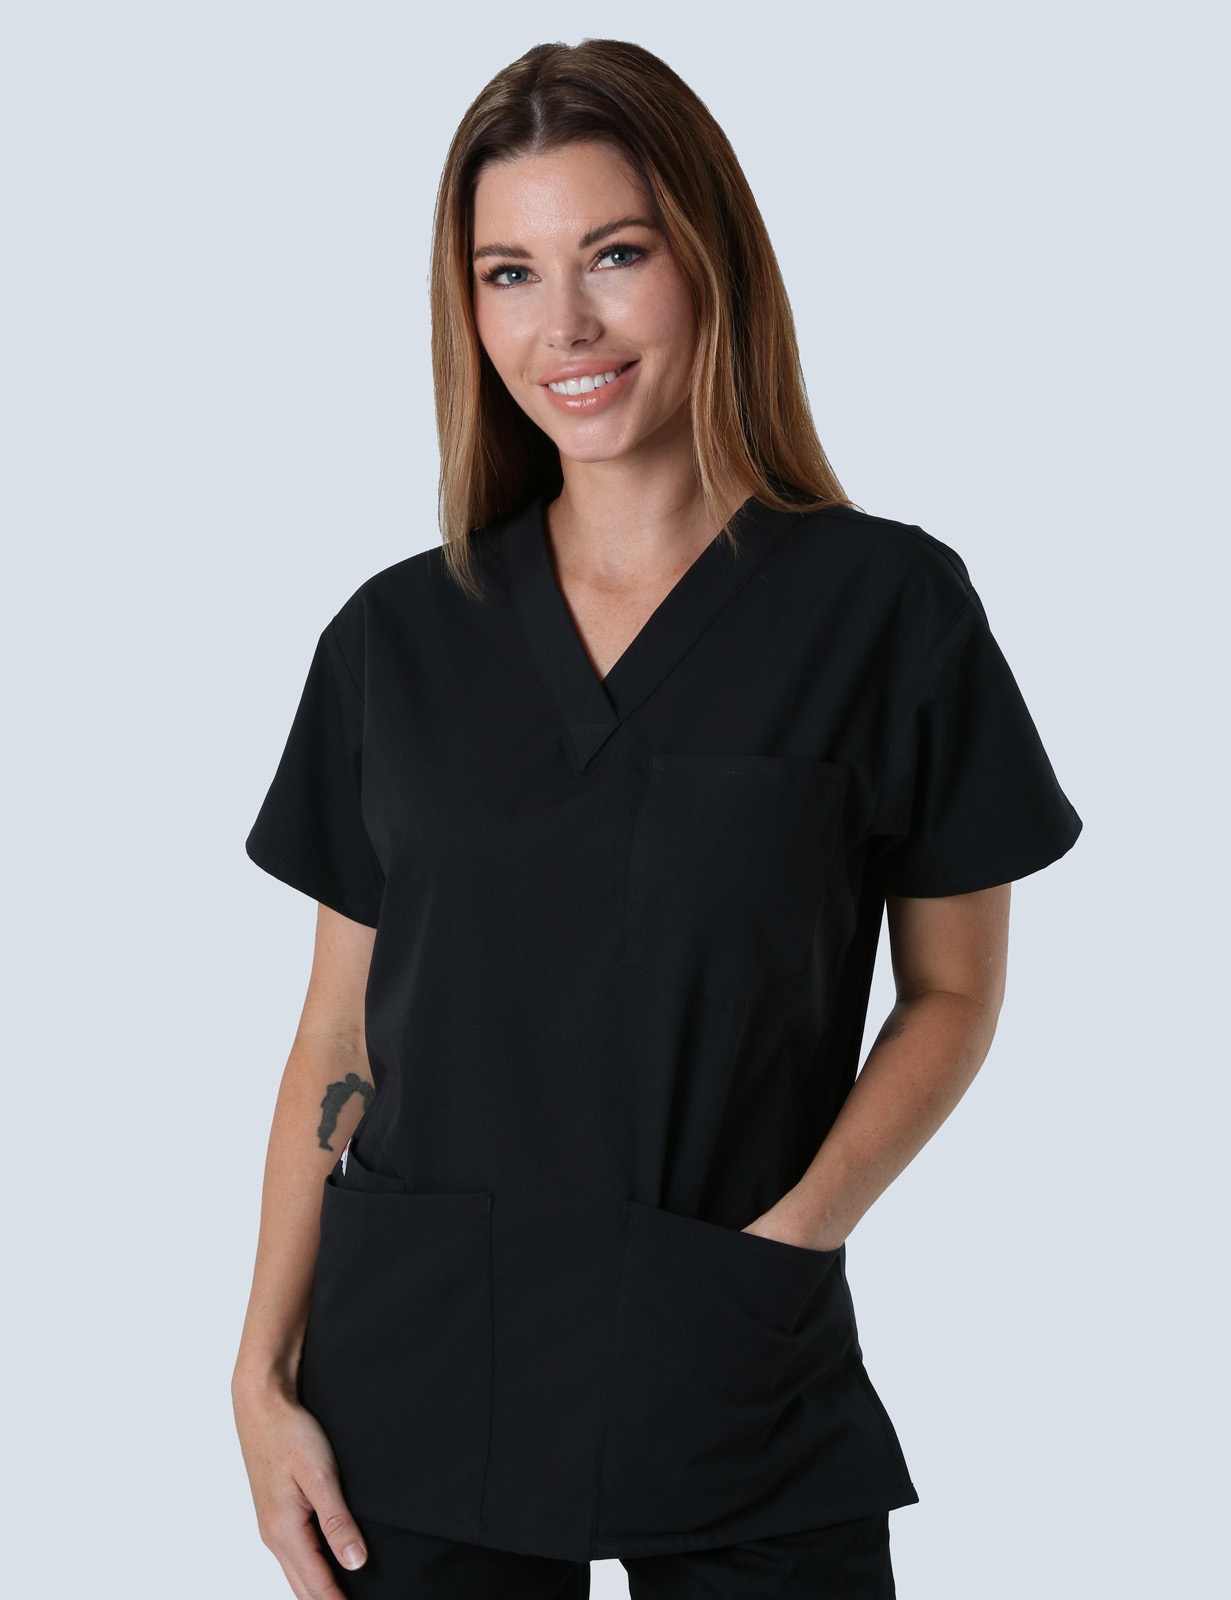 Queensland Children's Hospital Emergency Department Enrolled Nurse Uniform Top Bundle  (4 Pocket Top in Black incl Logos)